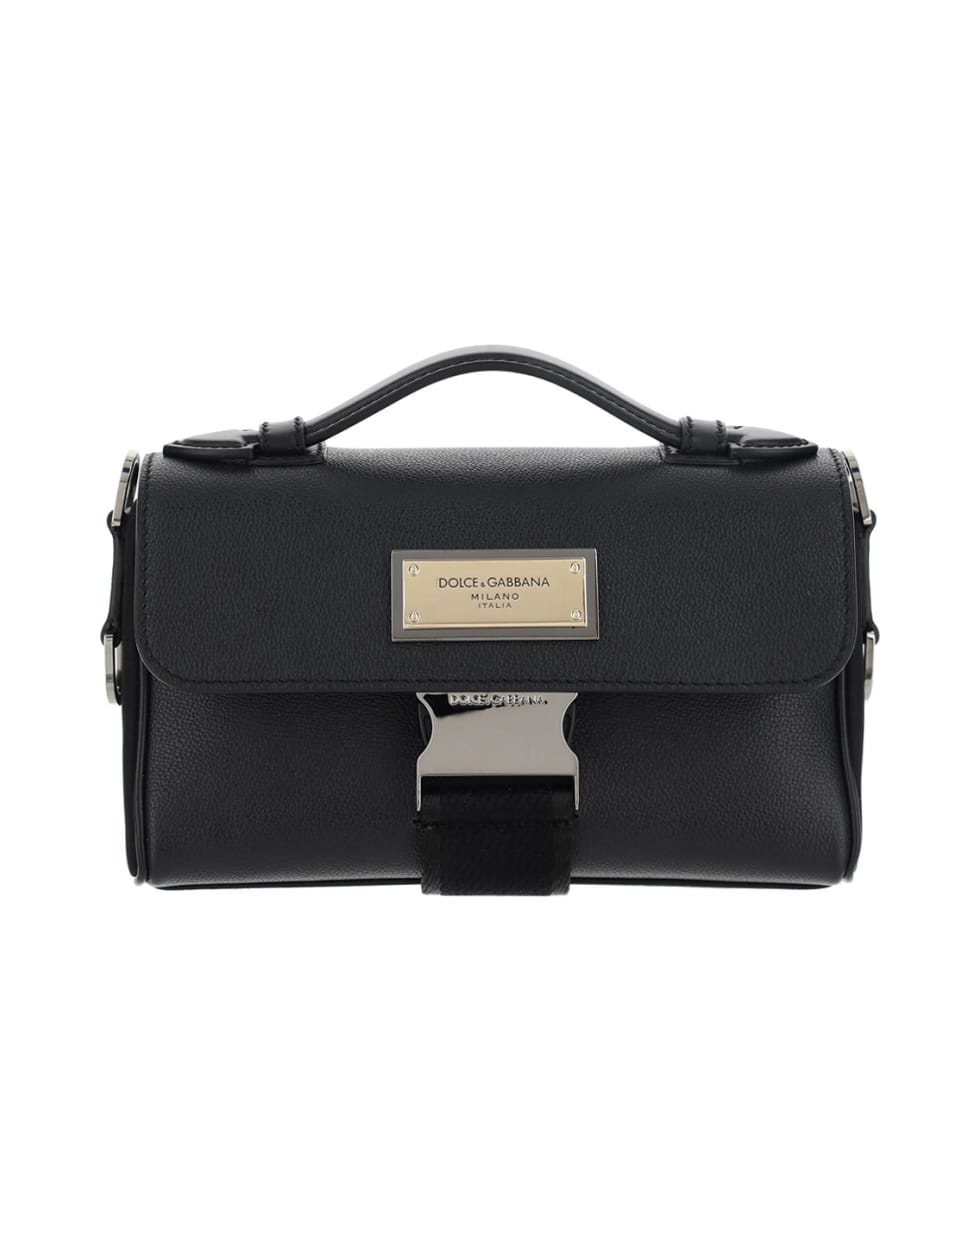 Dolce & Gabbana Shoulder Bag - Nero/nero